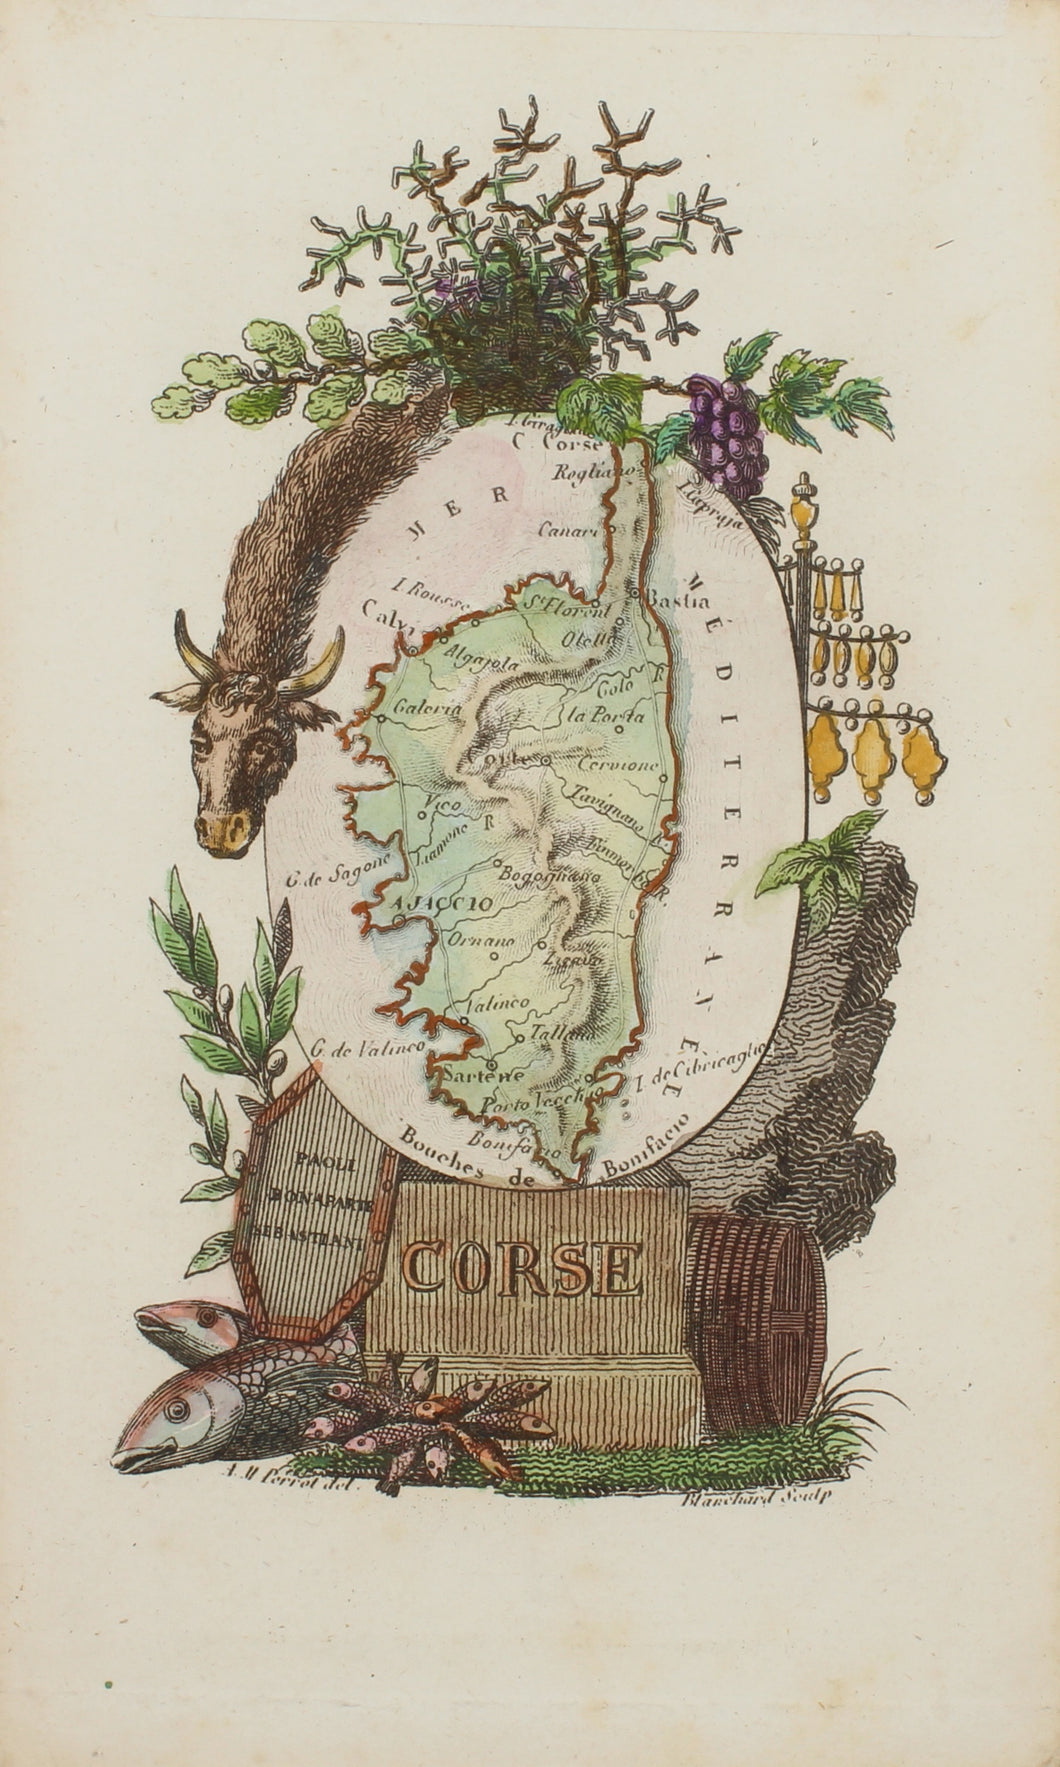 Map, Perrot Aristide Michel, CORSE, Atlas des Departments de la France, c1825